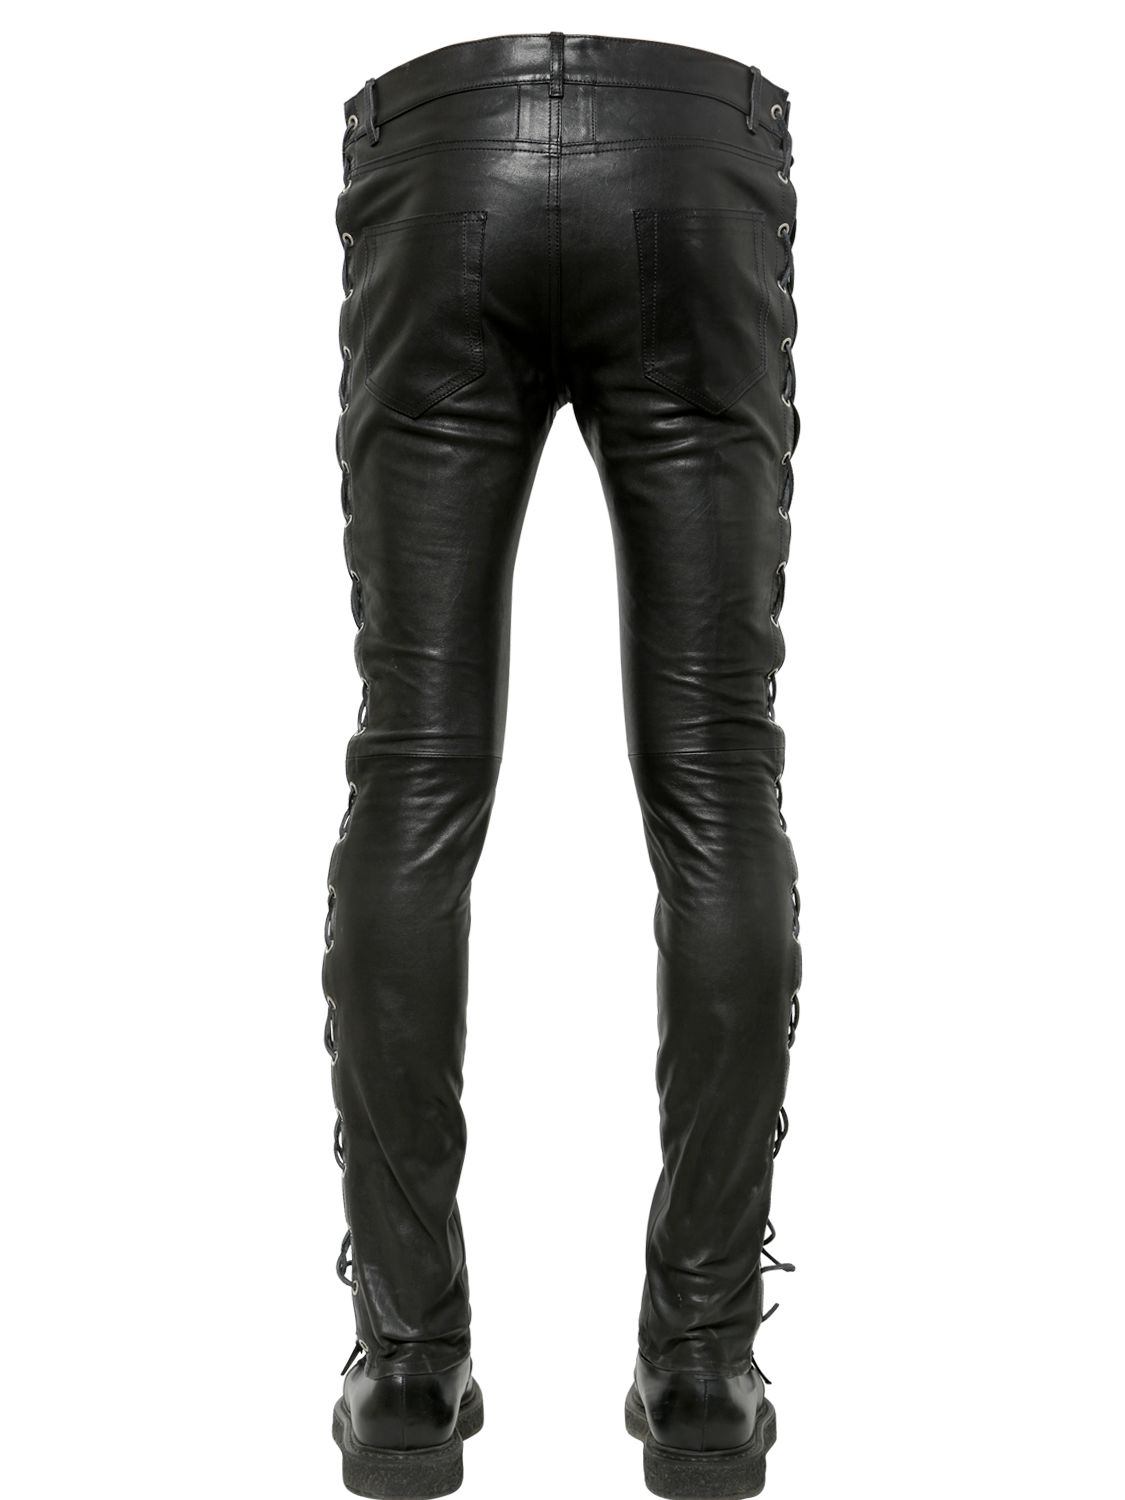 Saint Laurent 15Cm Skinny Lace-Up Leather Jeans in Black for Men - Lyst